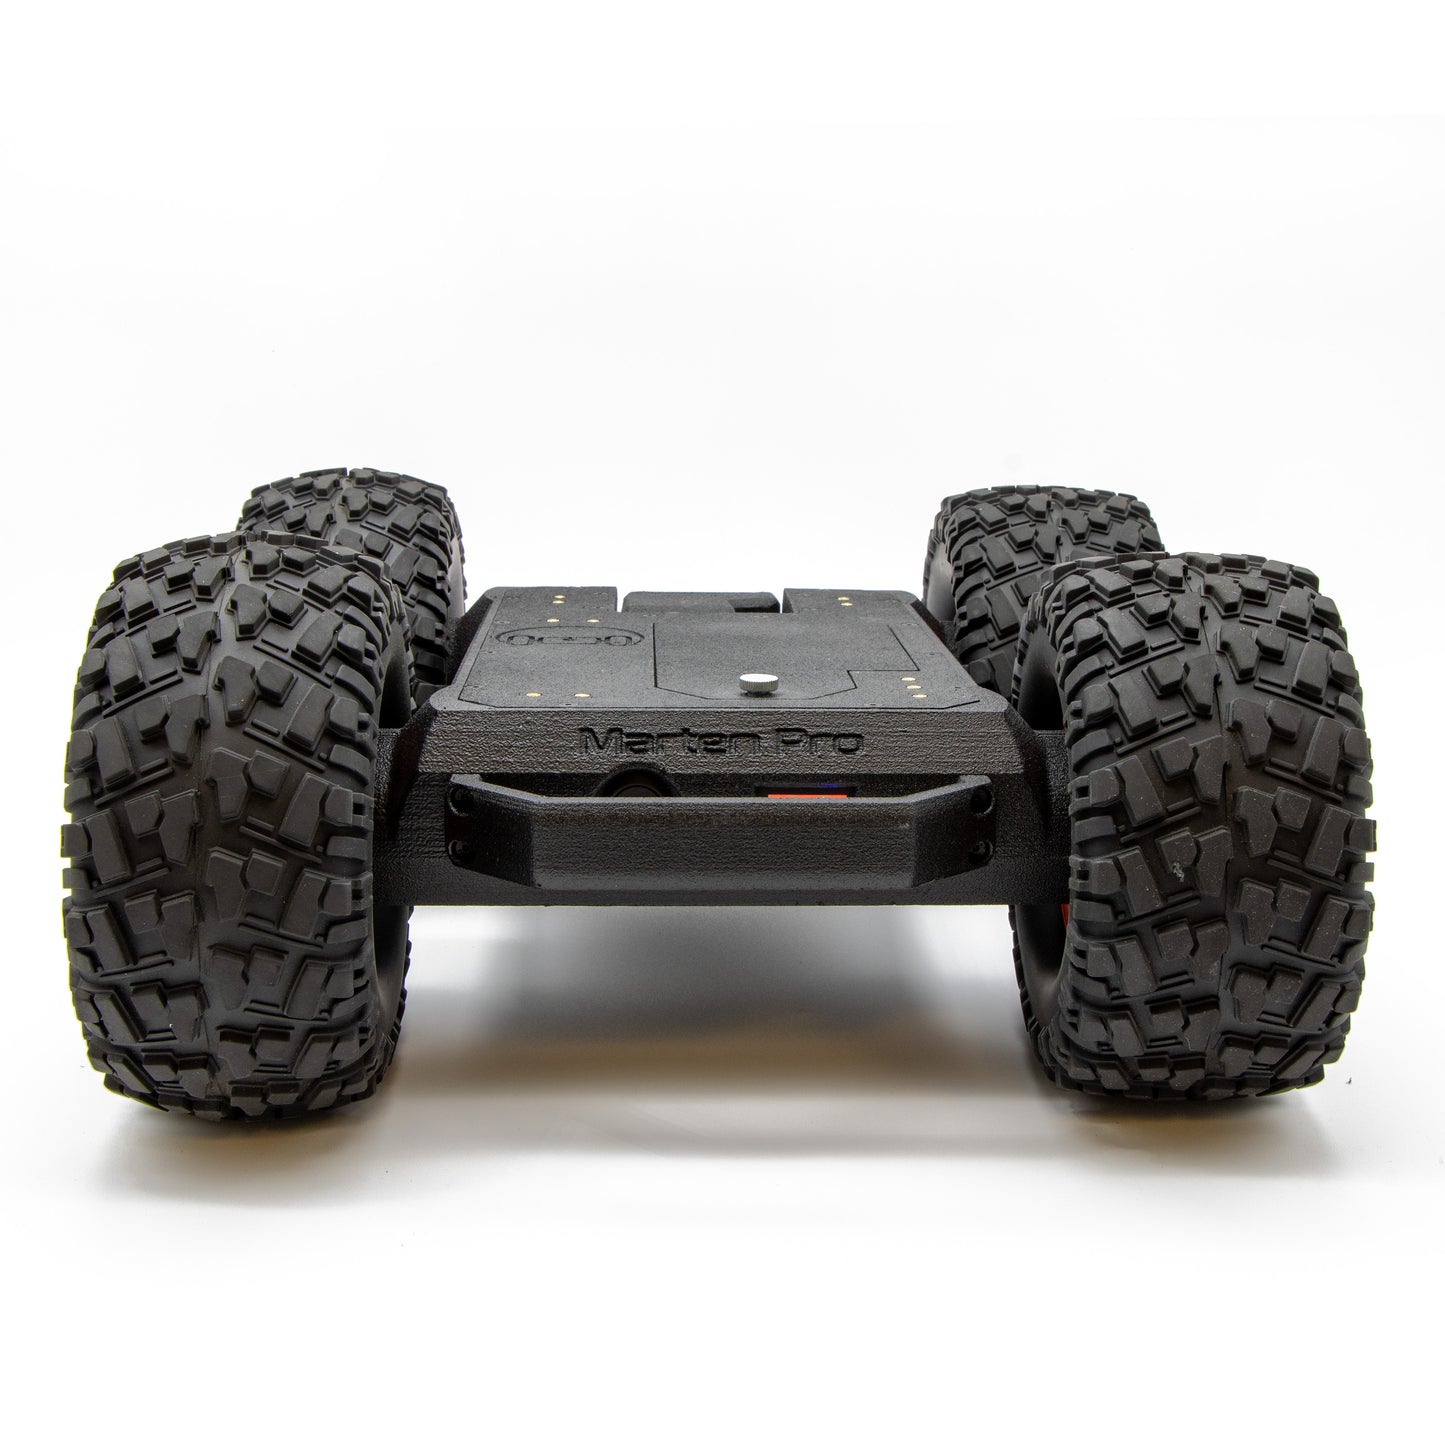 Marten MK2 Pro Advanced Robot Inspection Crawler